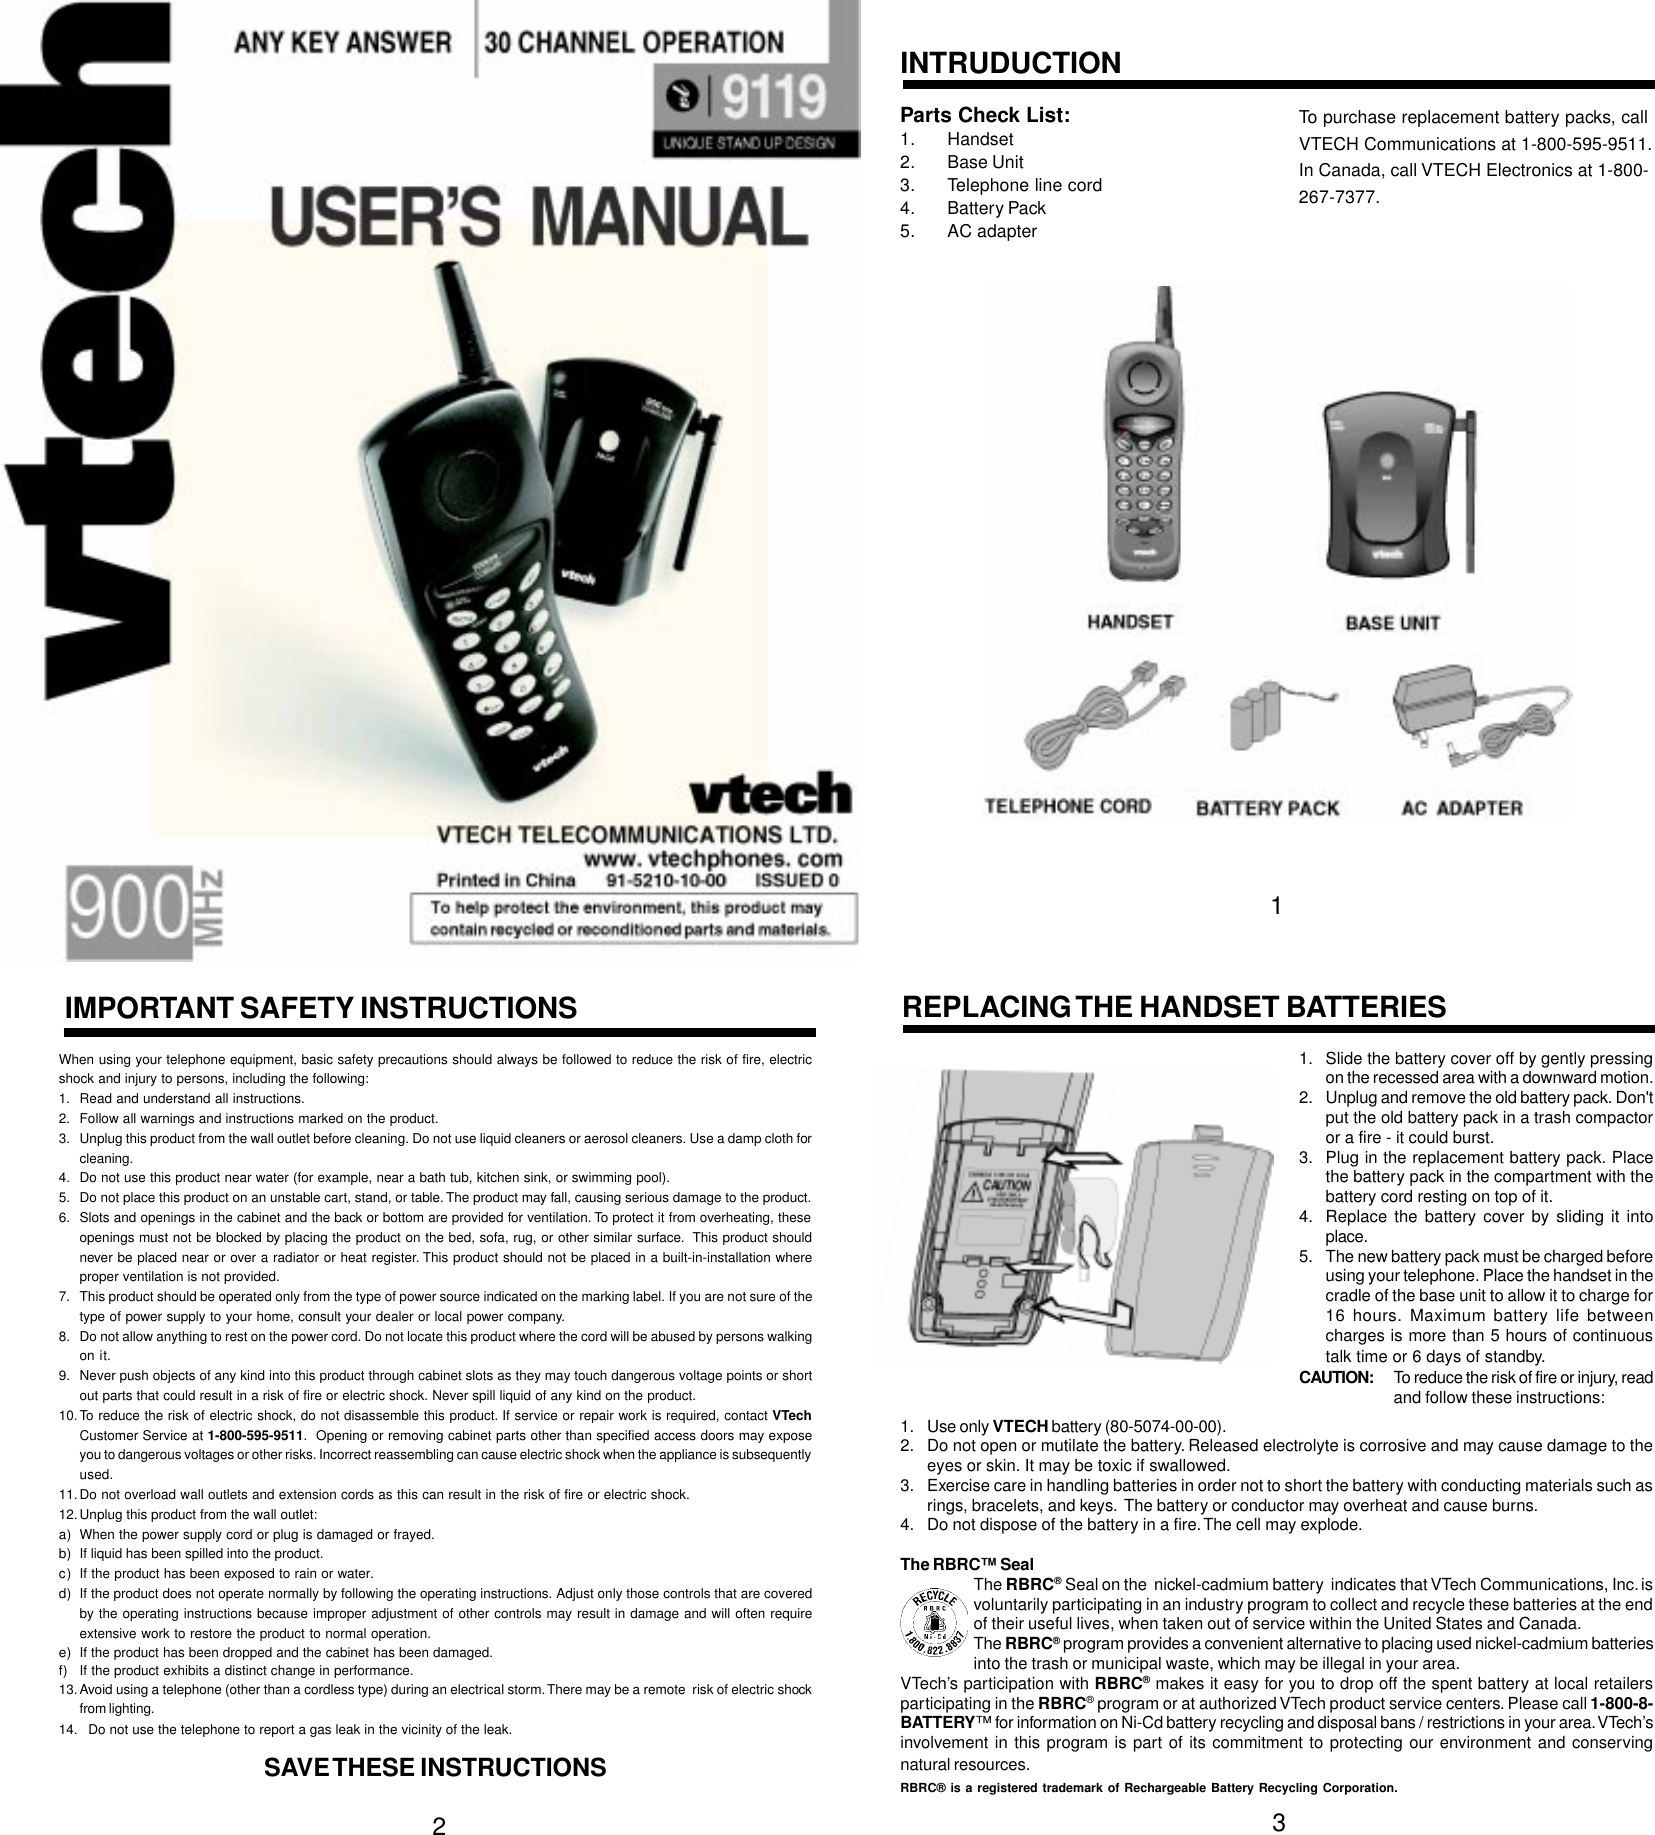 Page 1 of 4 - Vtech Vtech-9119-Users-Manual- USA MANU  Vtech-9119-users-manual